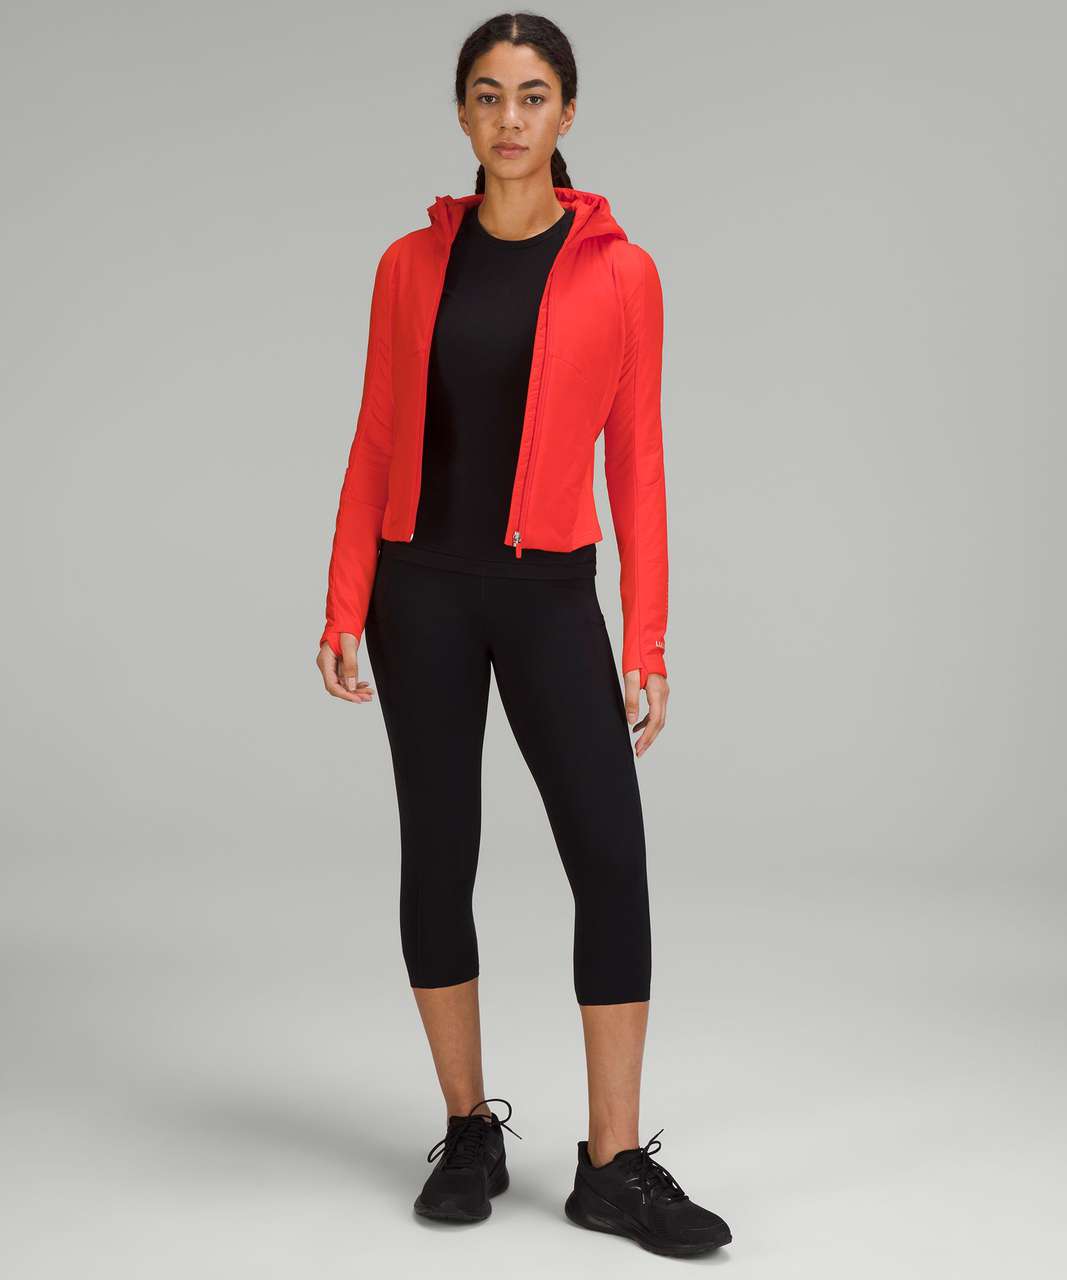  lululemon Athletica Women's Full-Zip Push Your Pace Hoodie  Jacket Slim Fit Size 8 Orange Hoody : Clothing, Shoes & Jewelry